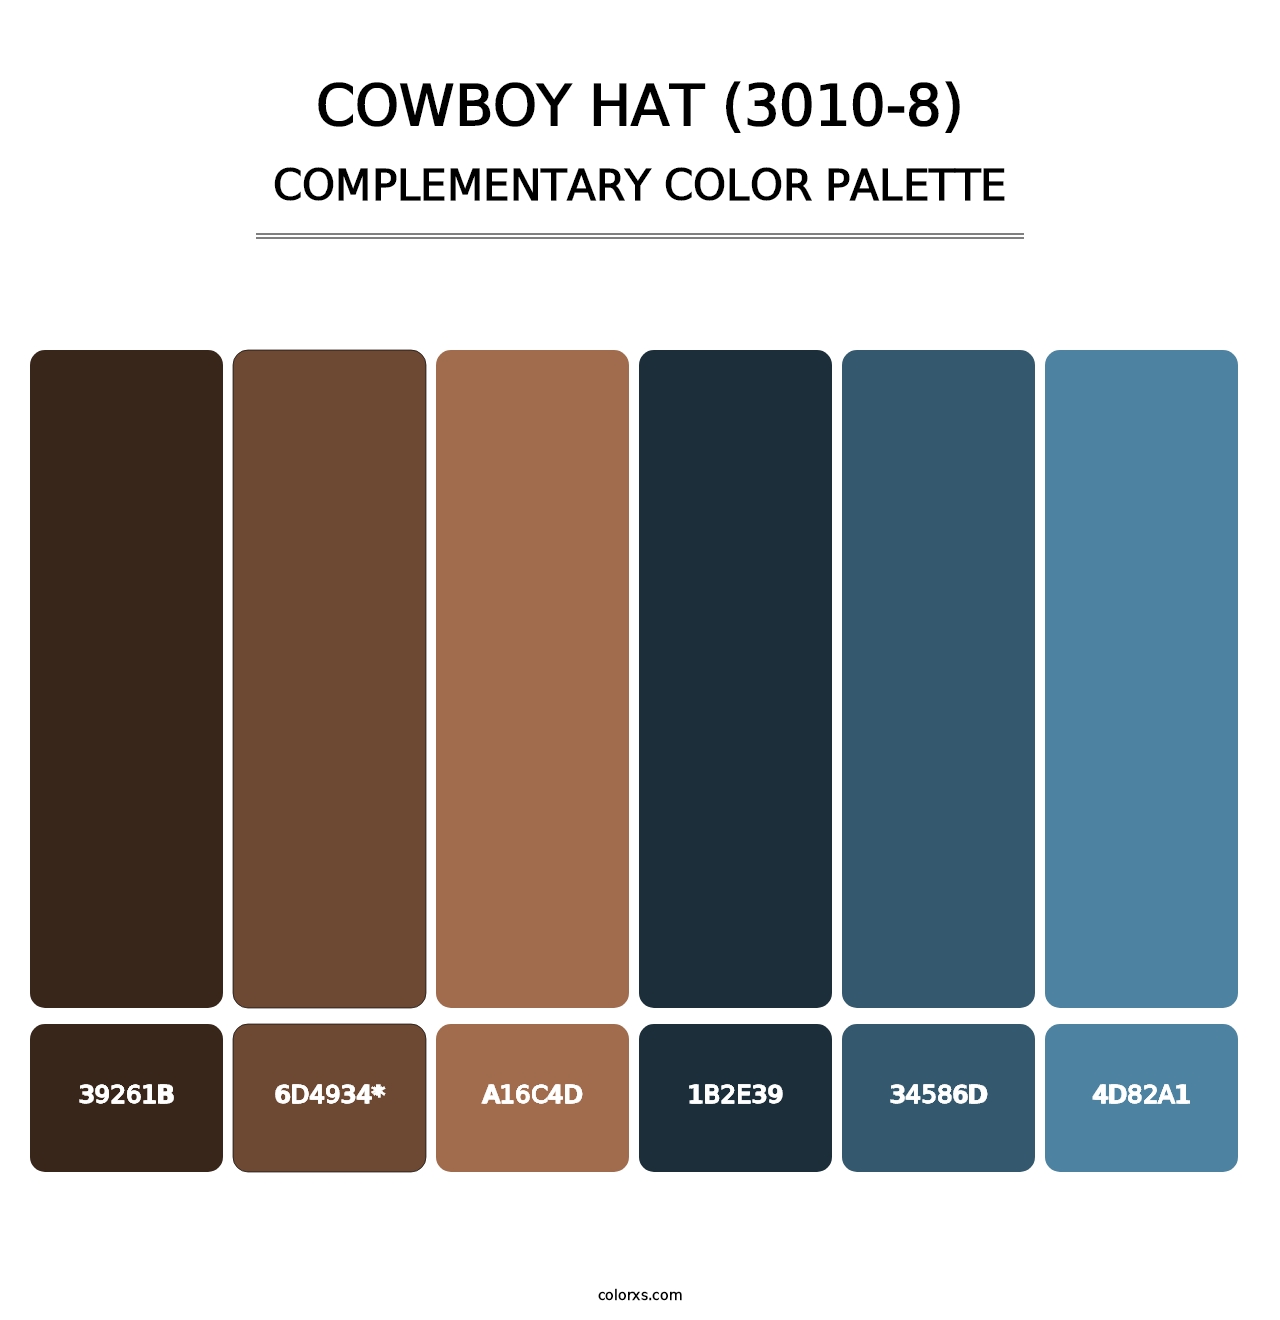 Cowboy Hat (3010-8) - Complementary Color Palette